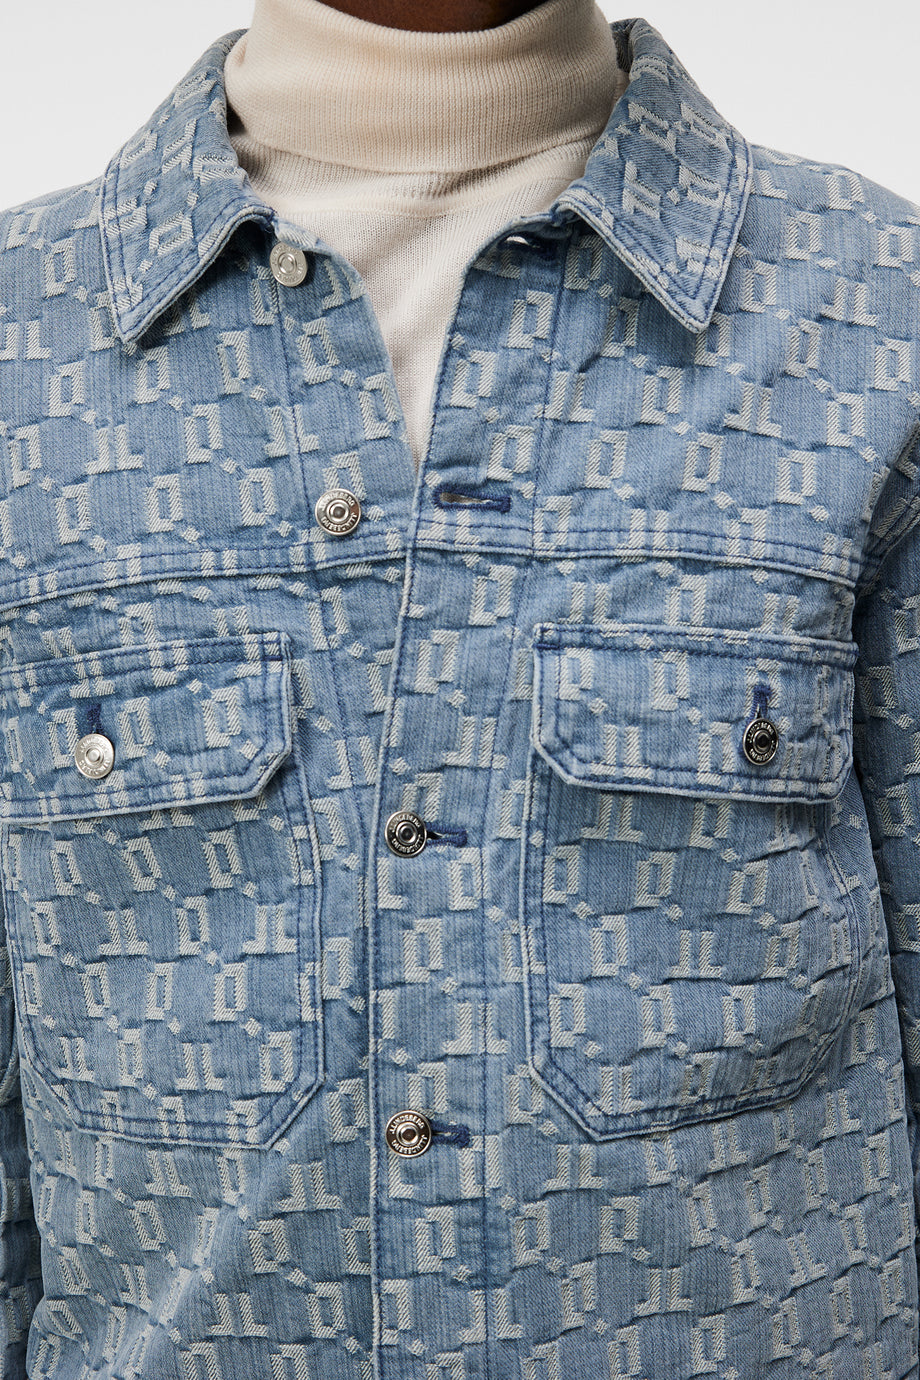 Louis Vuitton Monogram Printed Denim Jacket Indigo. Size 46